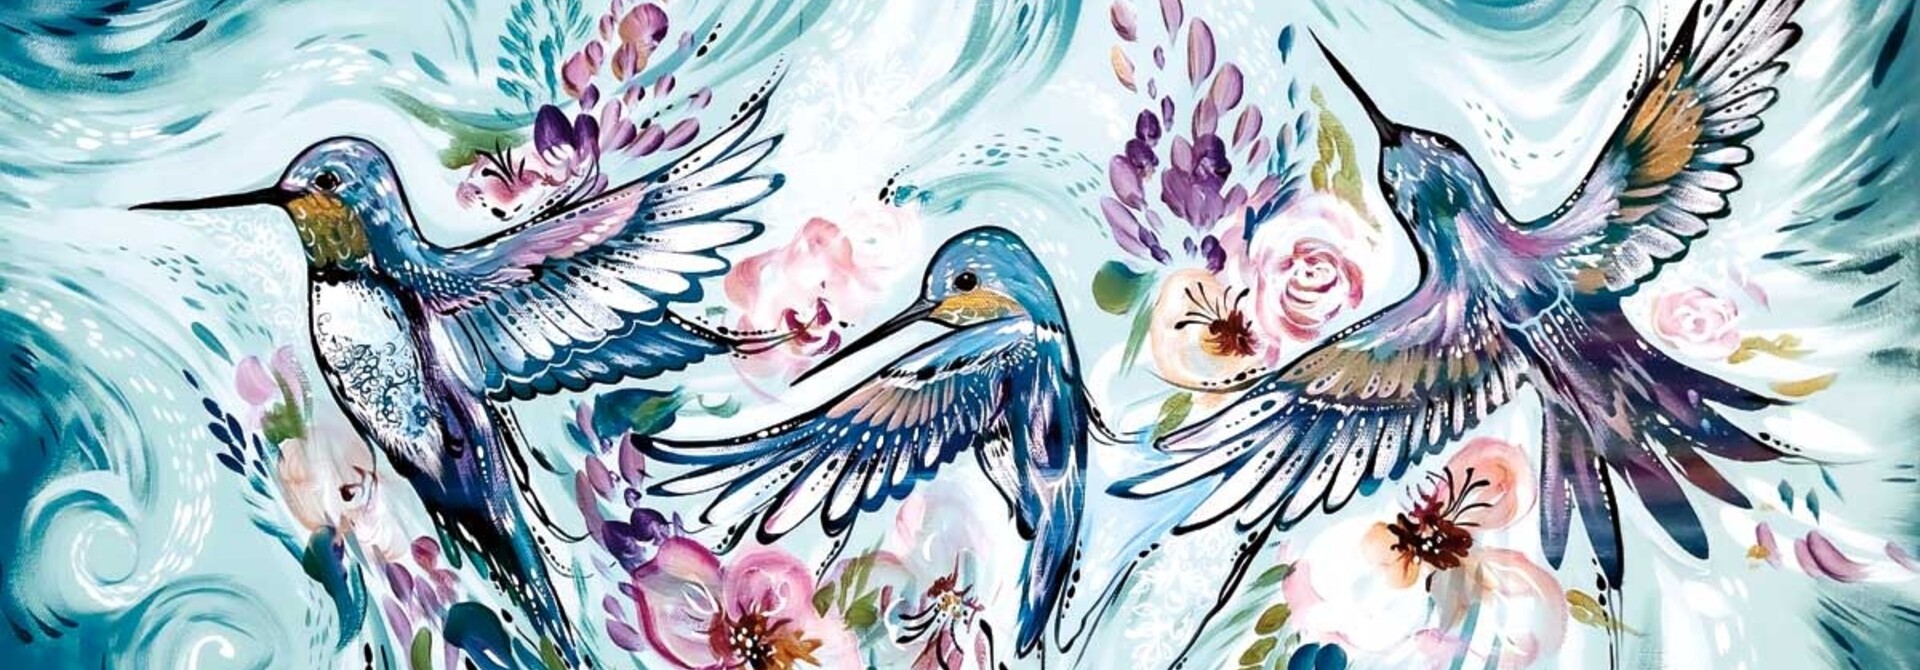 Framed & Matted Art Card - Dance of the Hummingbird by Carla Joseph